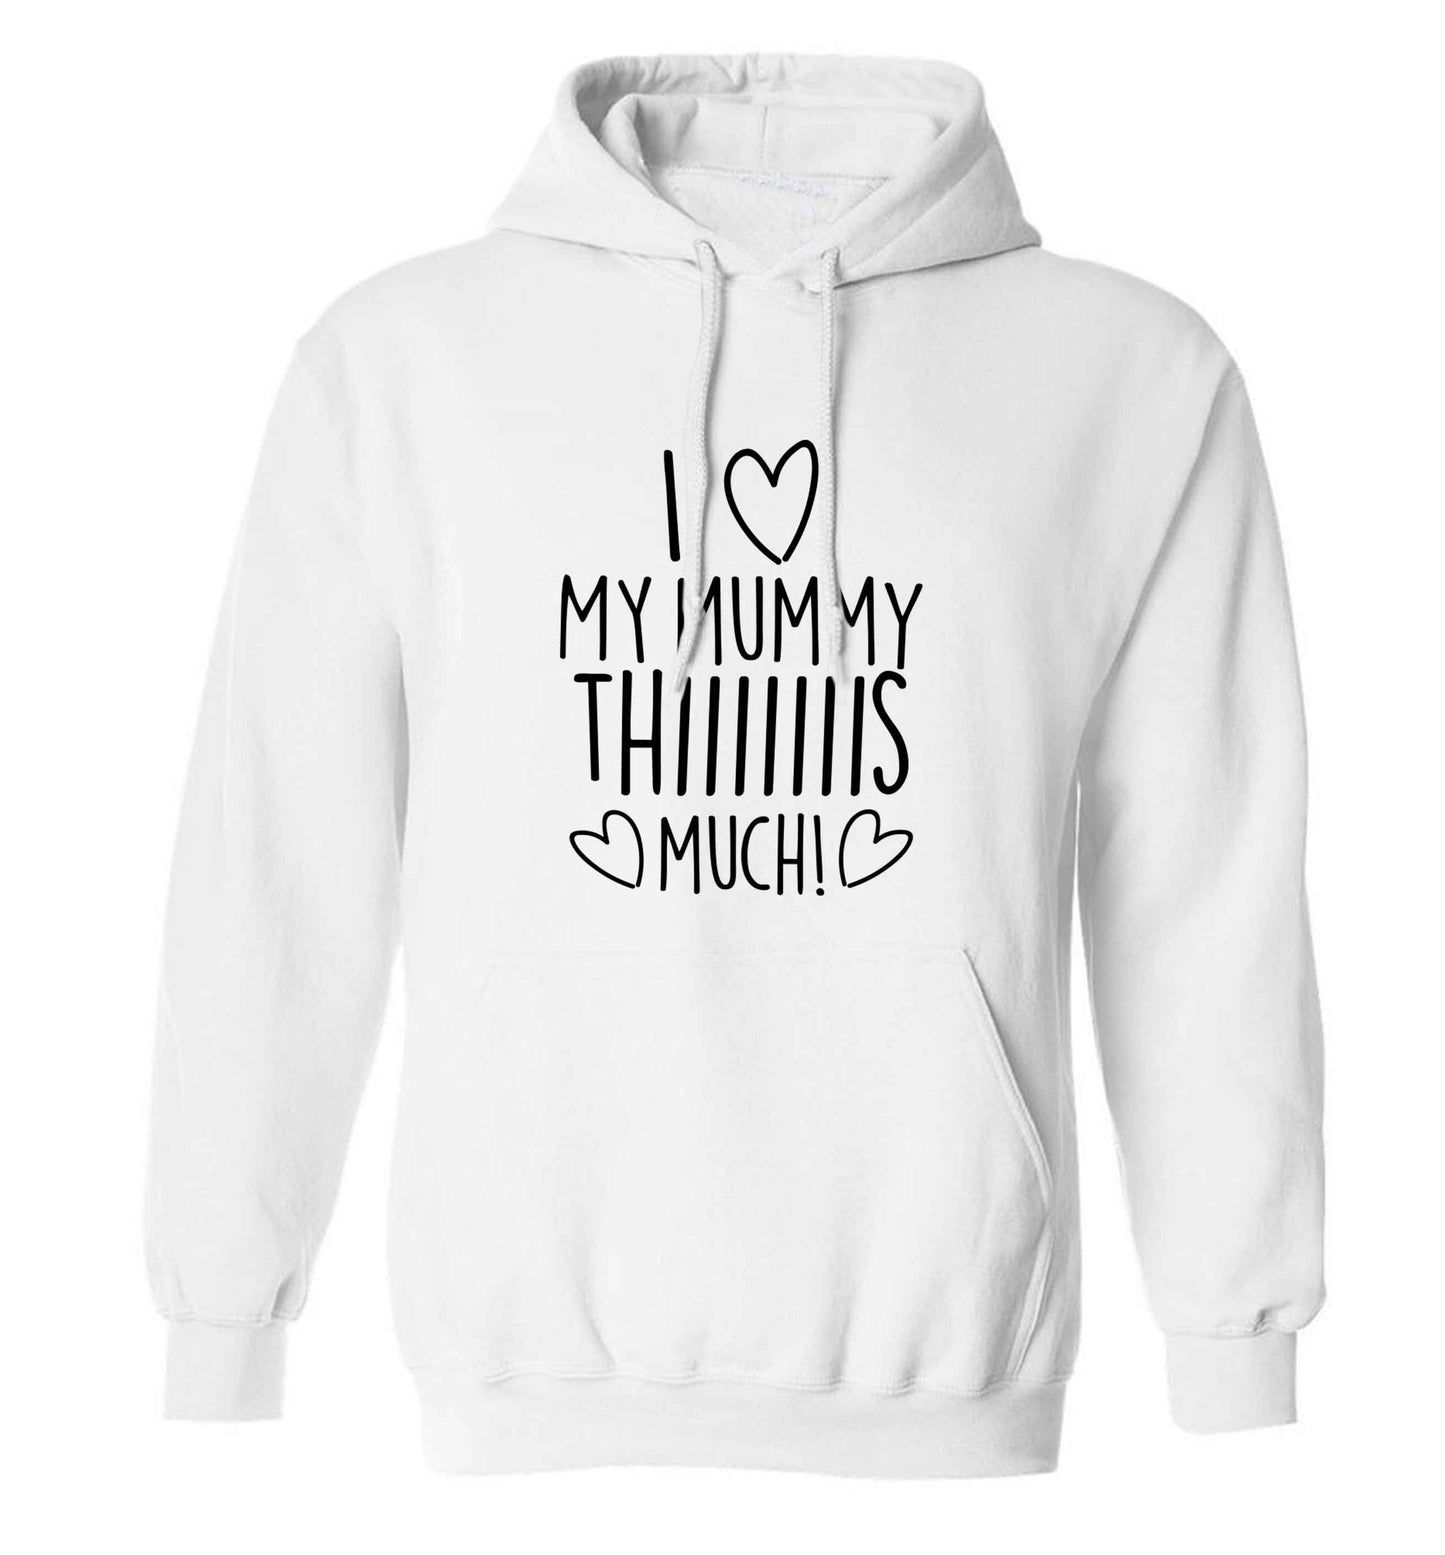 I love my mummy thiiiiis much! adults unisex white hoodie 2XL